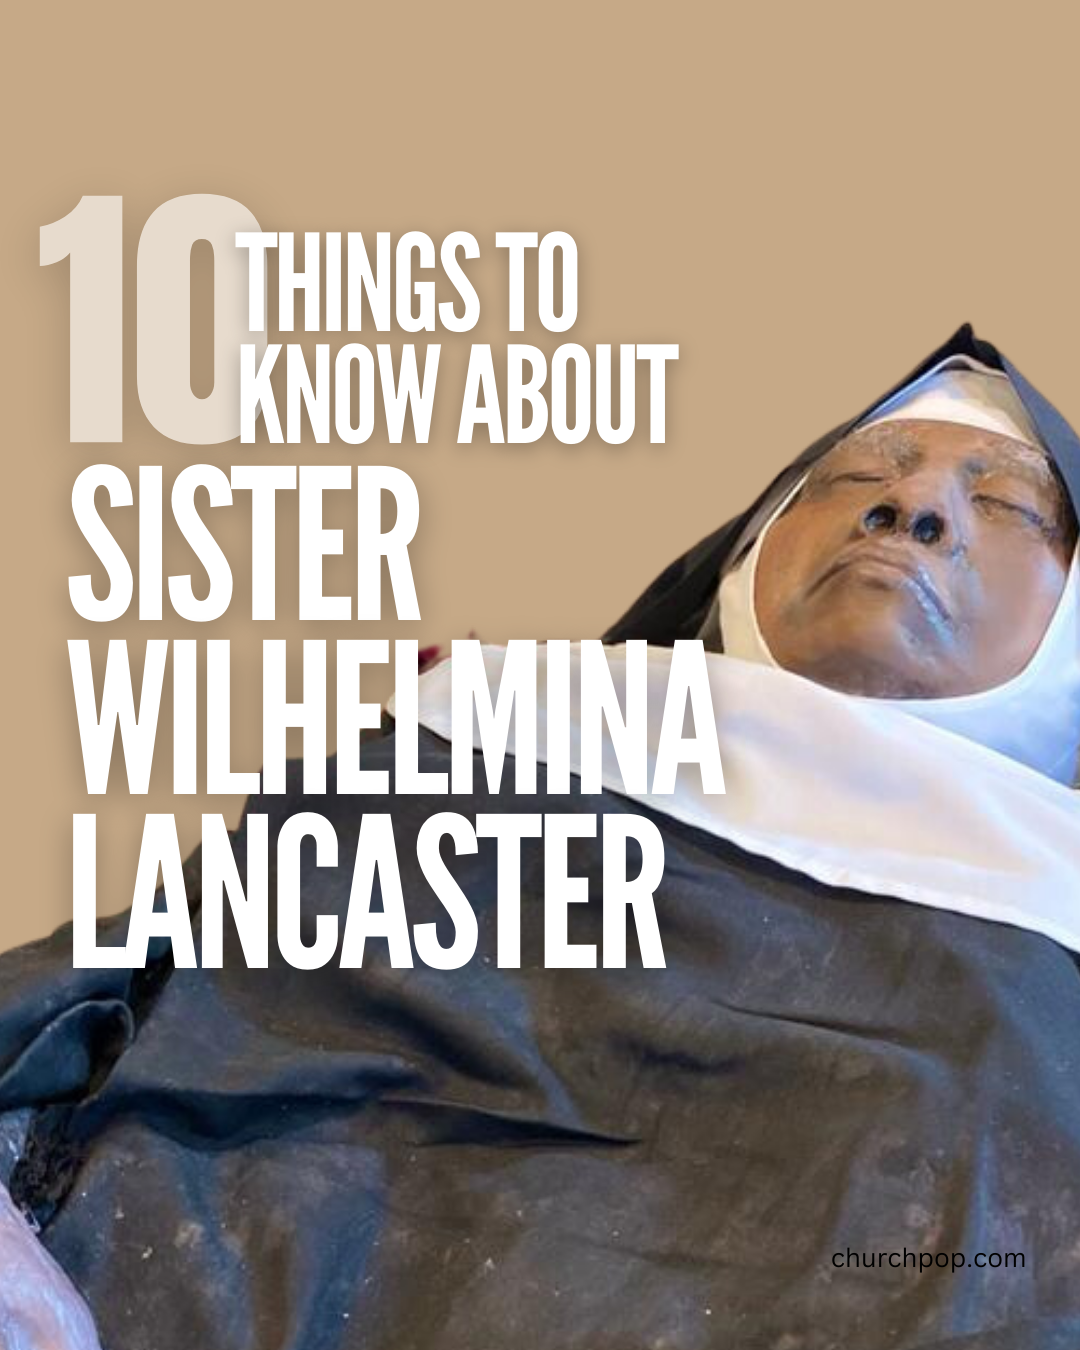 Who is Sister Wilhelmina?